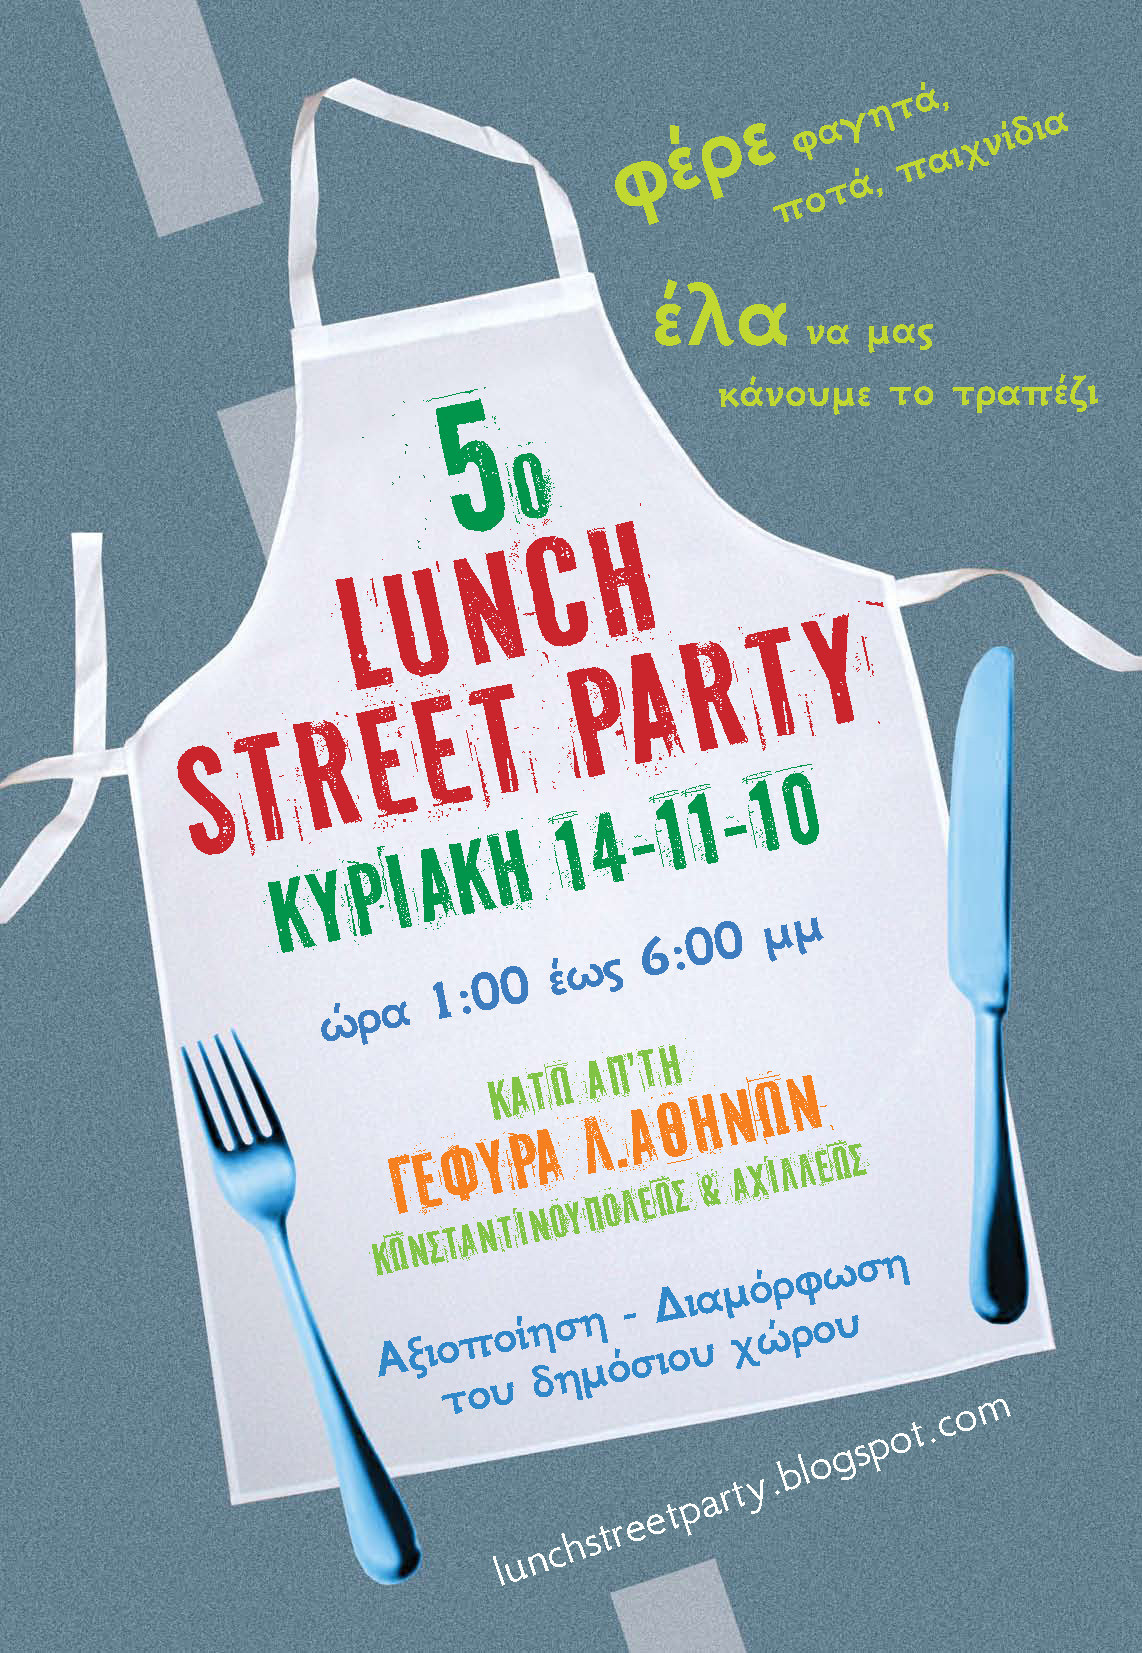 5o Lunch Street Party αύριο, Κυριακή